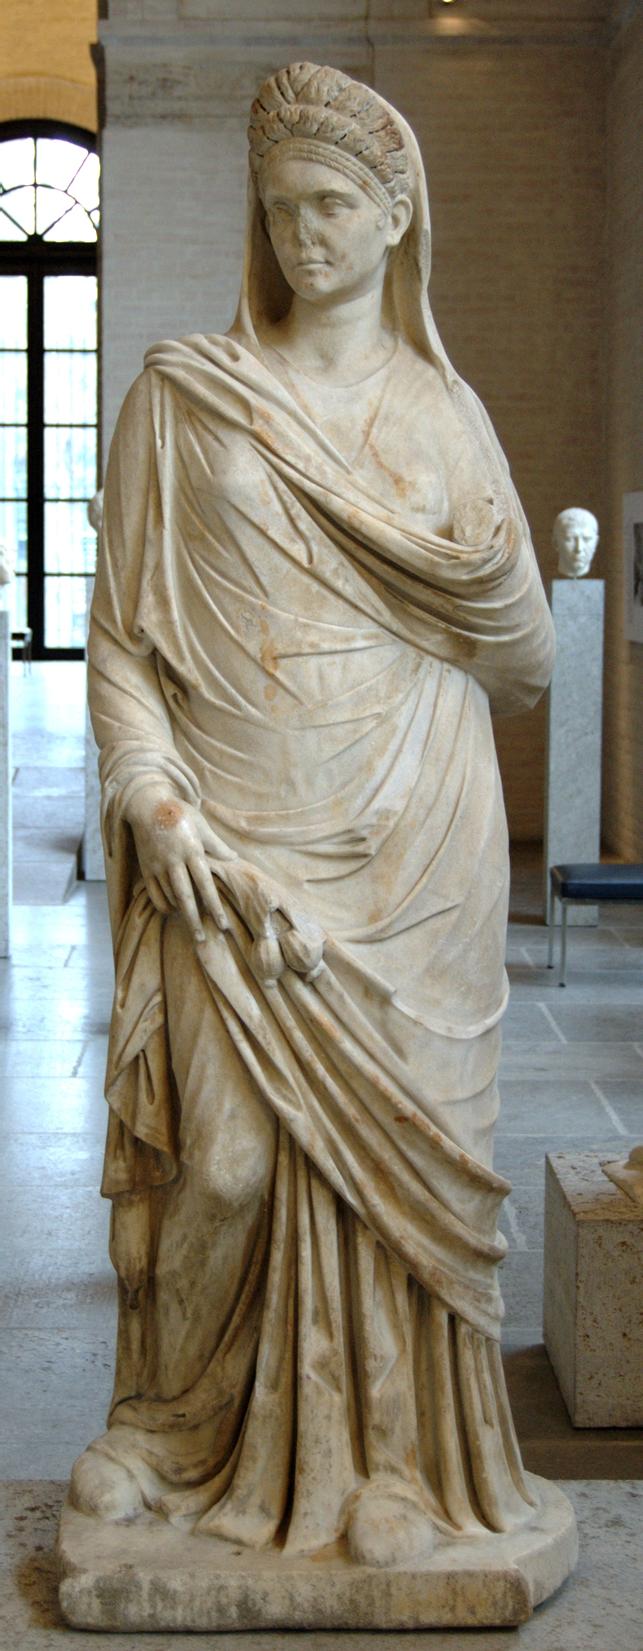 https://upload.wikimedia.org/wikipedia/commons/4/43/Roman_woman_Glyptothek_Munich_377.jpg